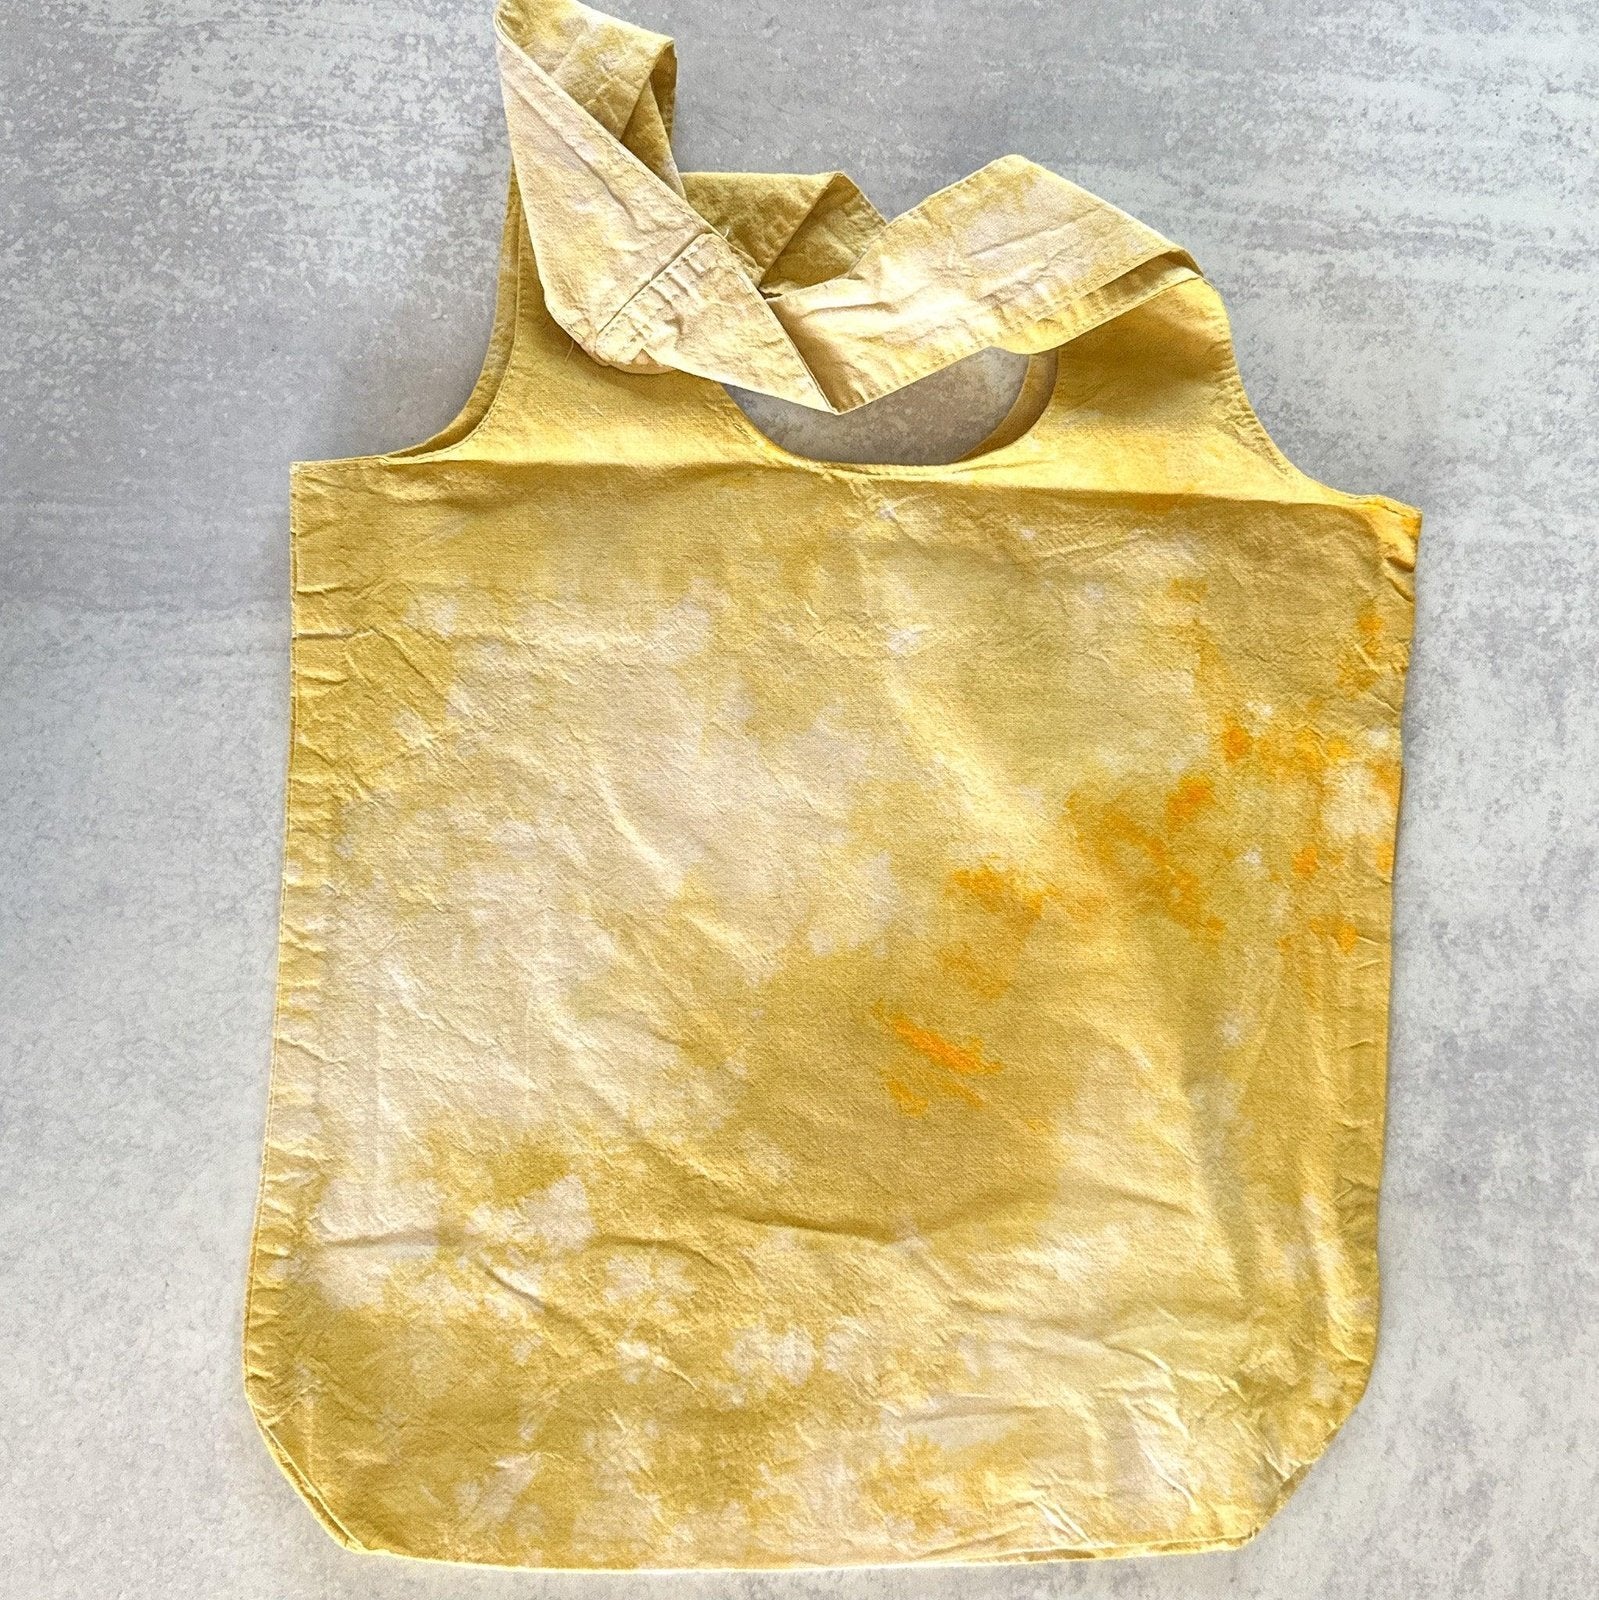 Yellow Tie-dye Ball Python Tote Bag